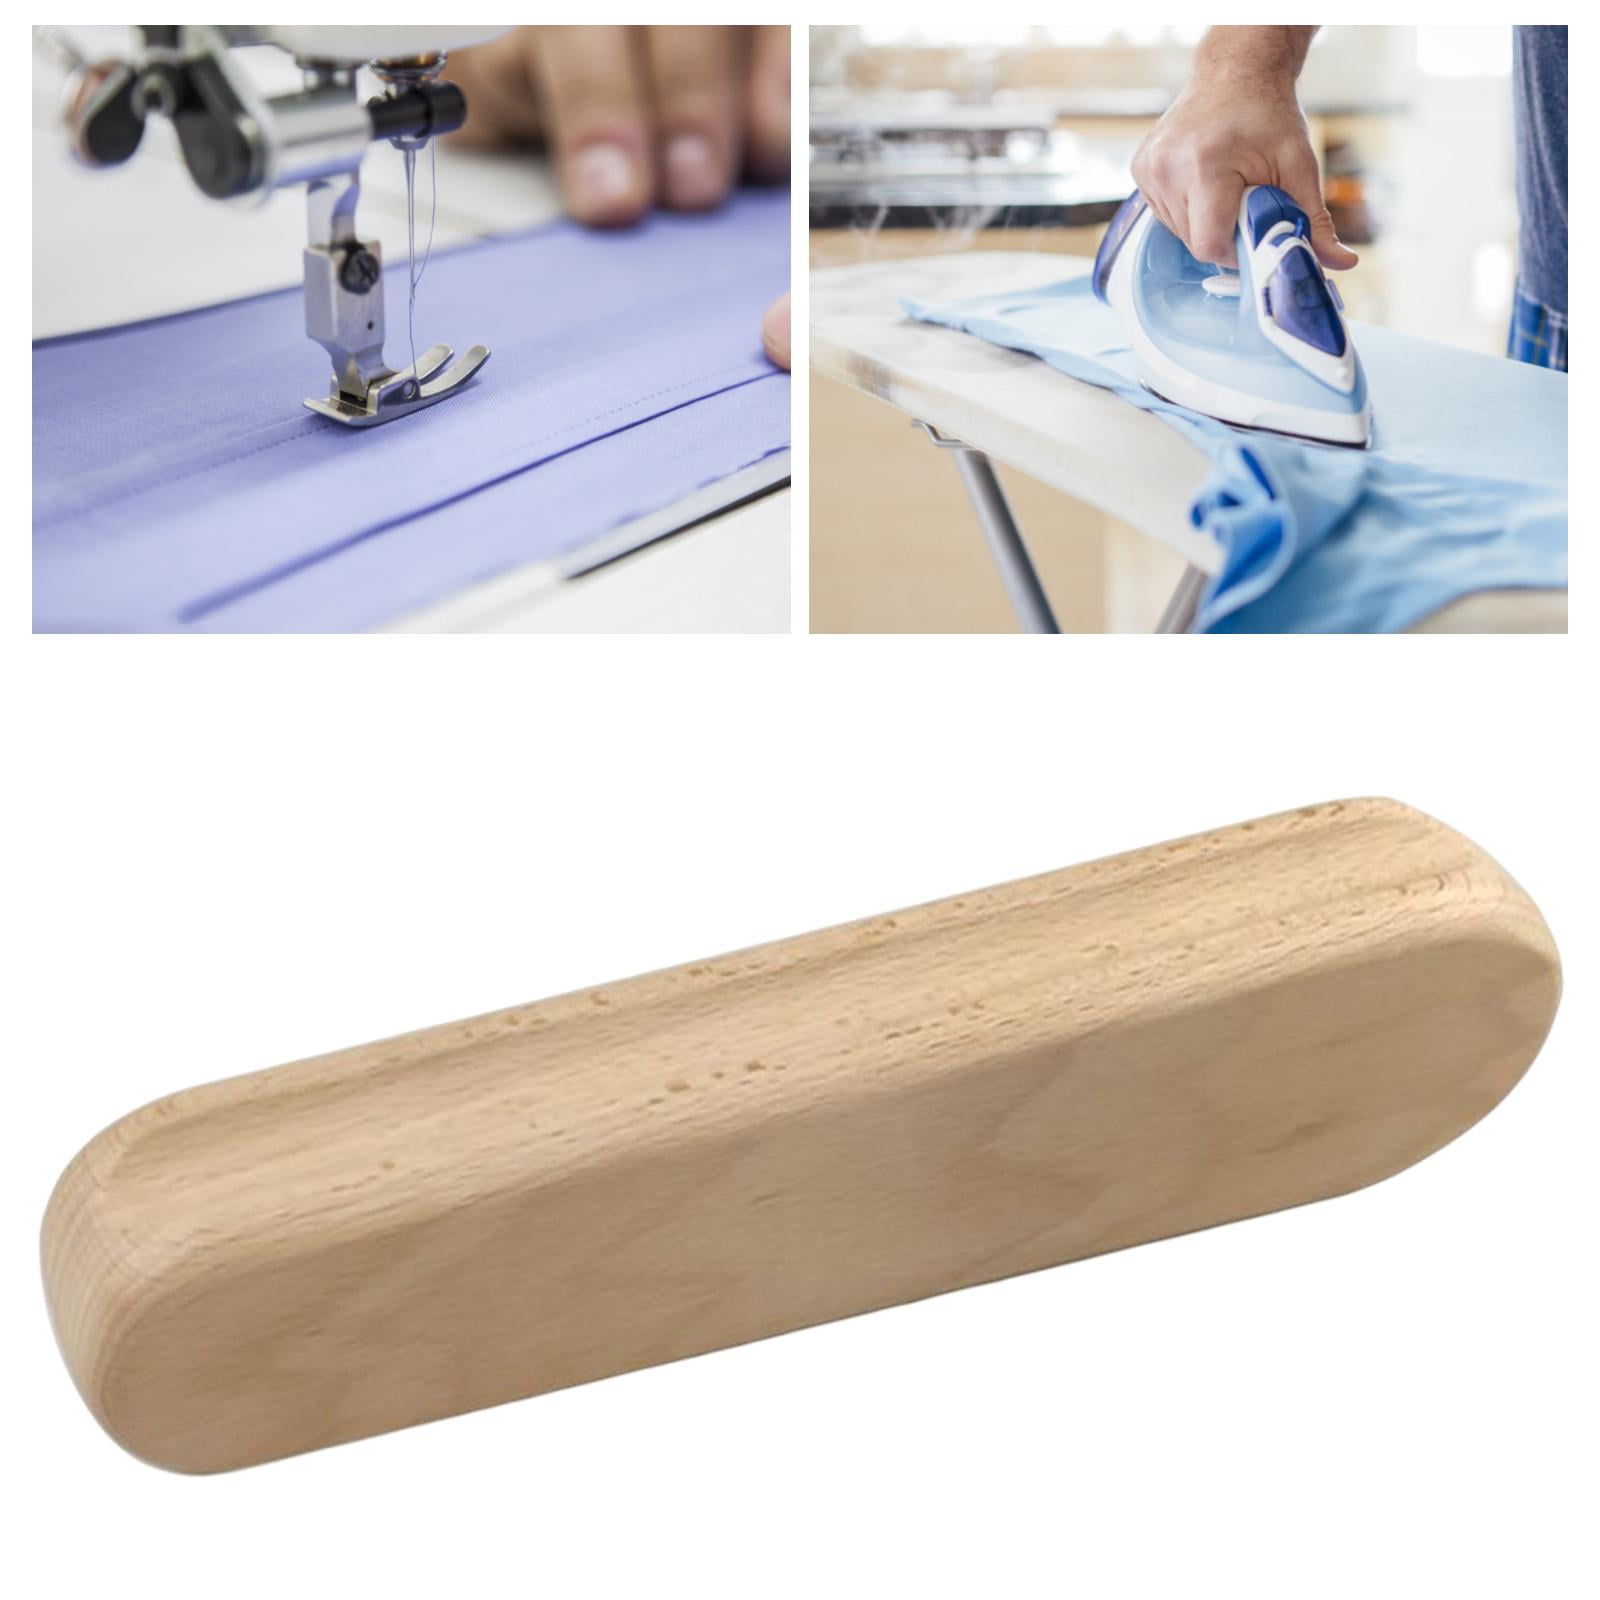 Wooden Tailors Clapper Large Handheld Seam Flattening Tool 24cm